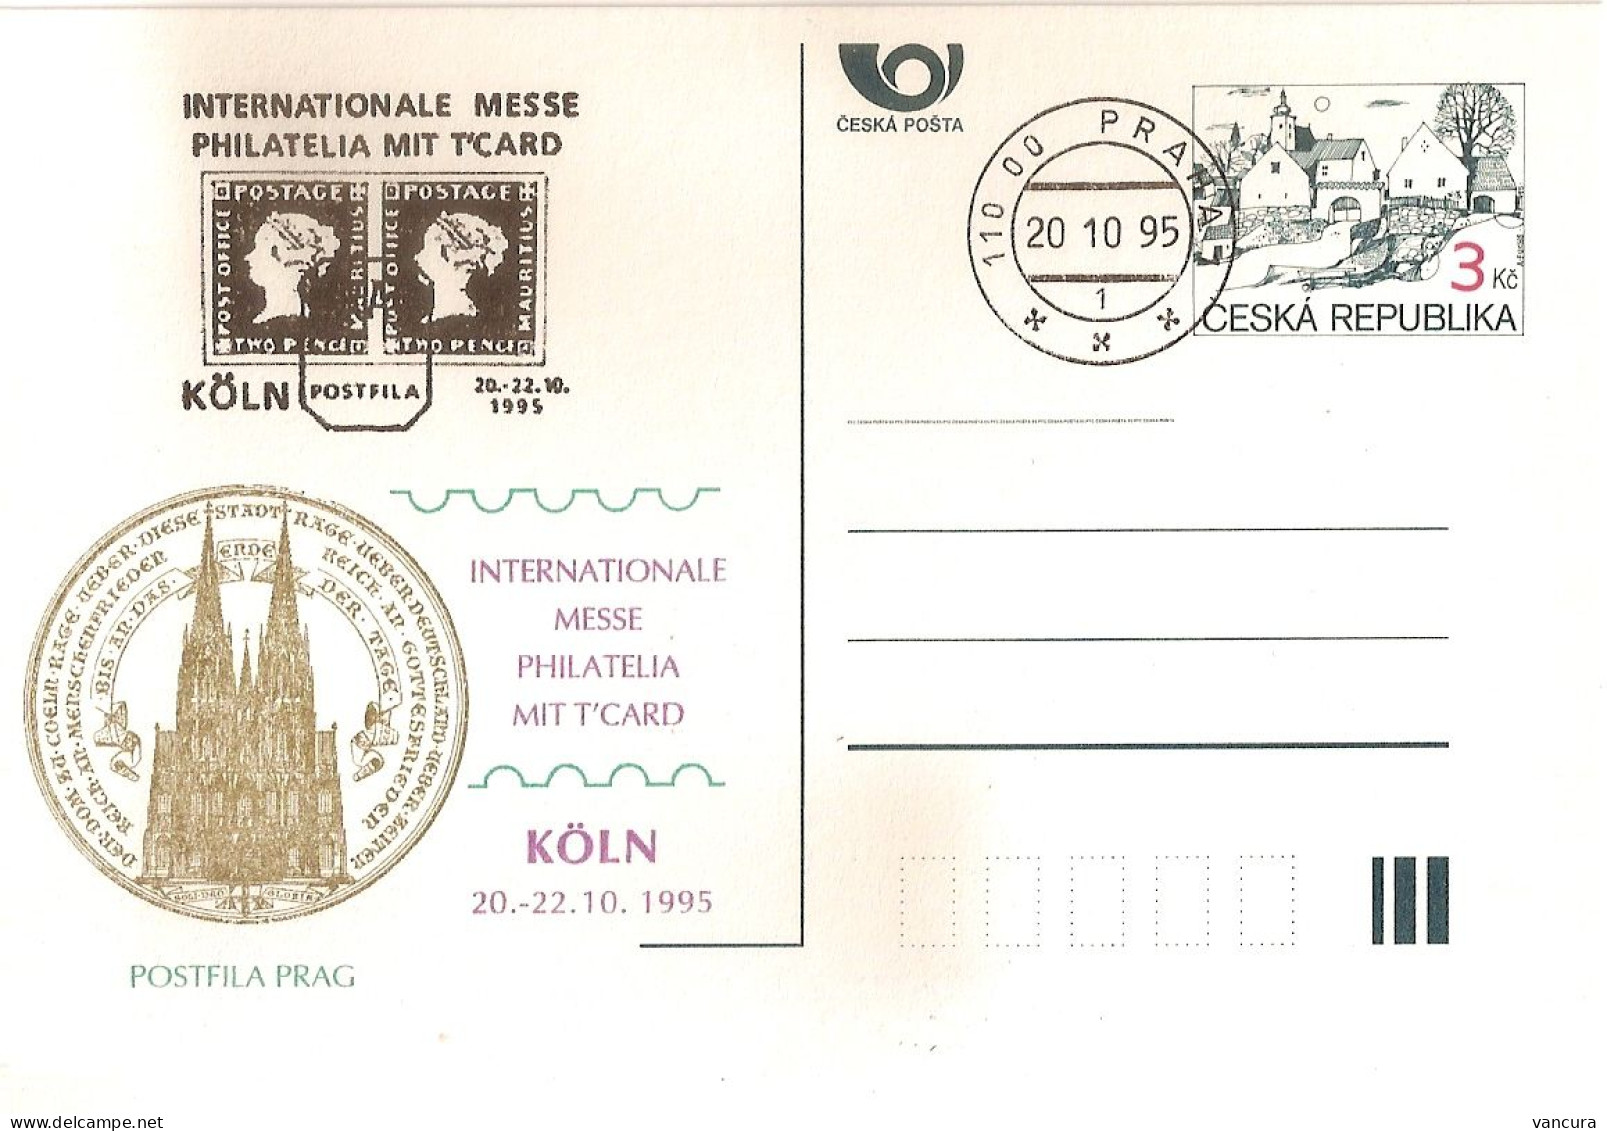 CDV A 10 Czech Republic Köln 1995 NOTICE POOR SCAN, BUT THE CARD IS PERFECT! Pennyblack - Postkaarten